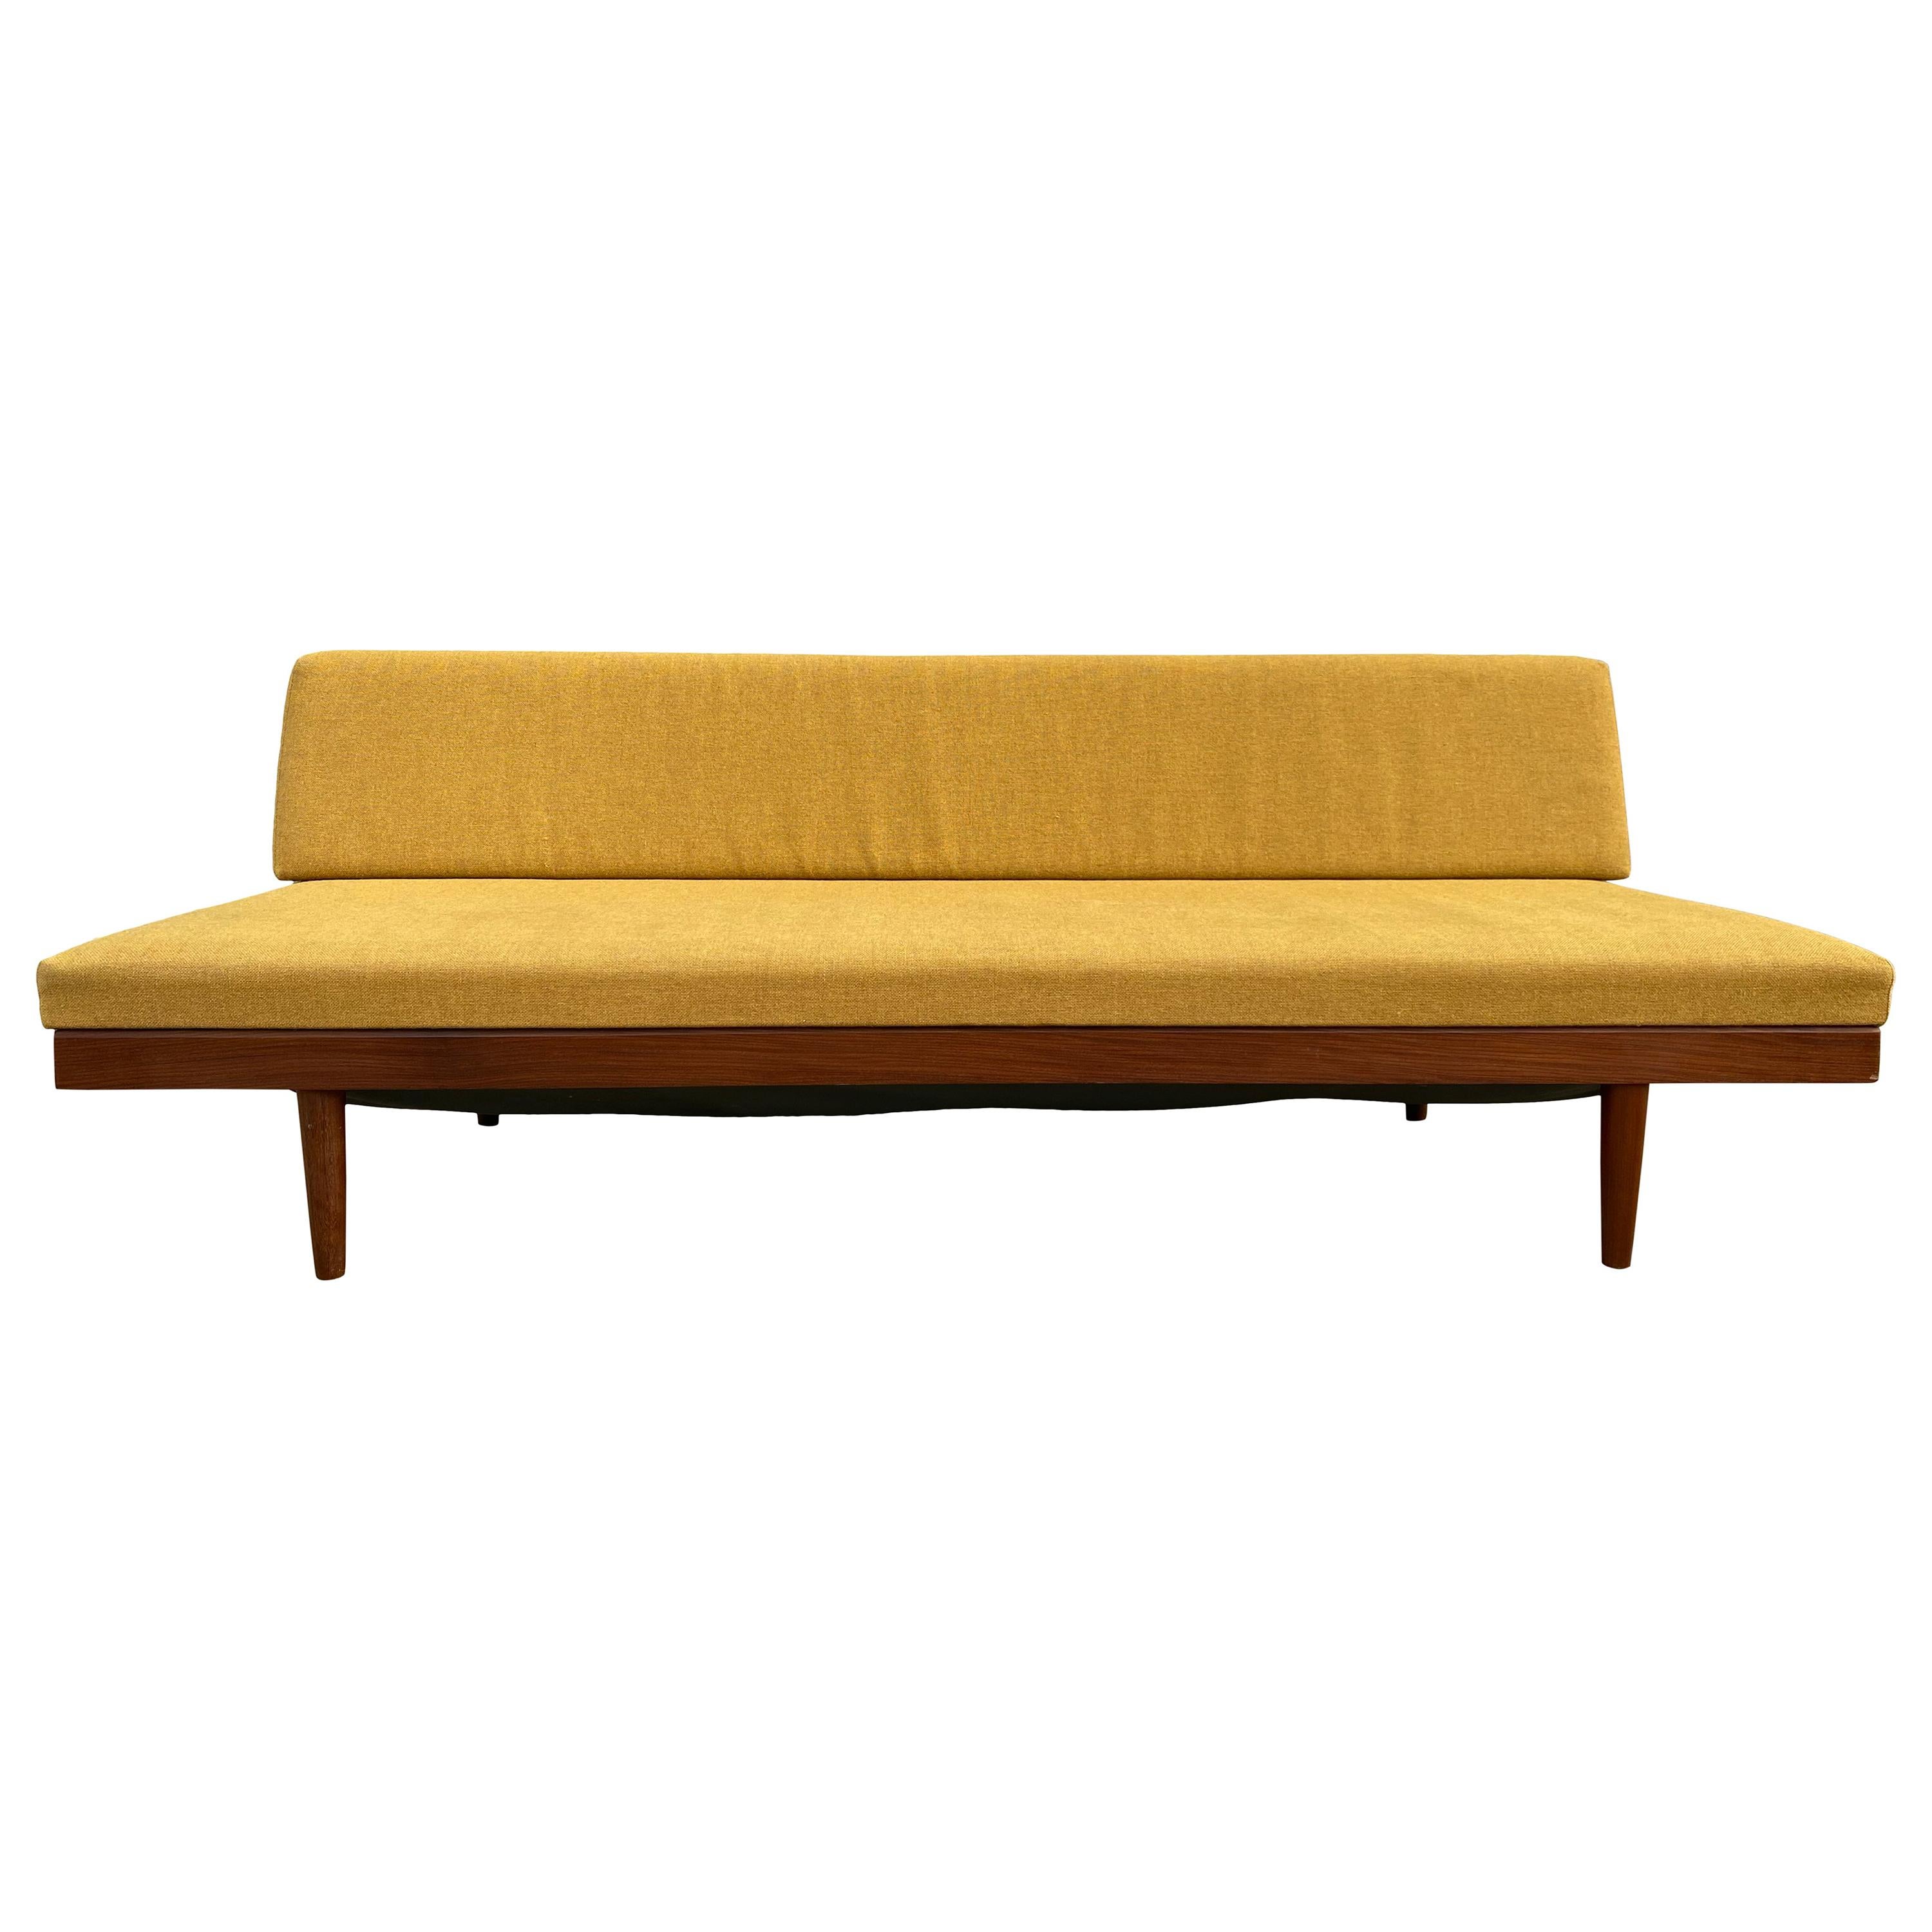 Midcentury Danish Modern teak Sofa Couch Daybed by Edvard Kindt for Gustav Bahus